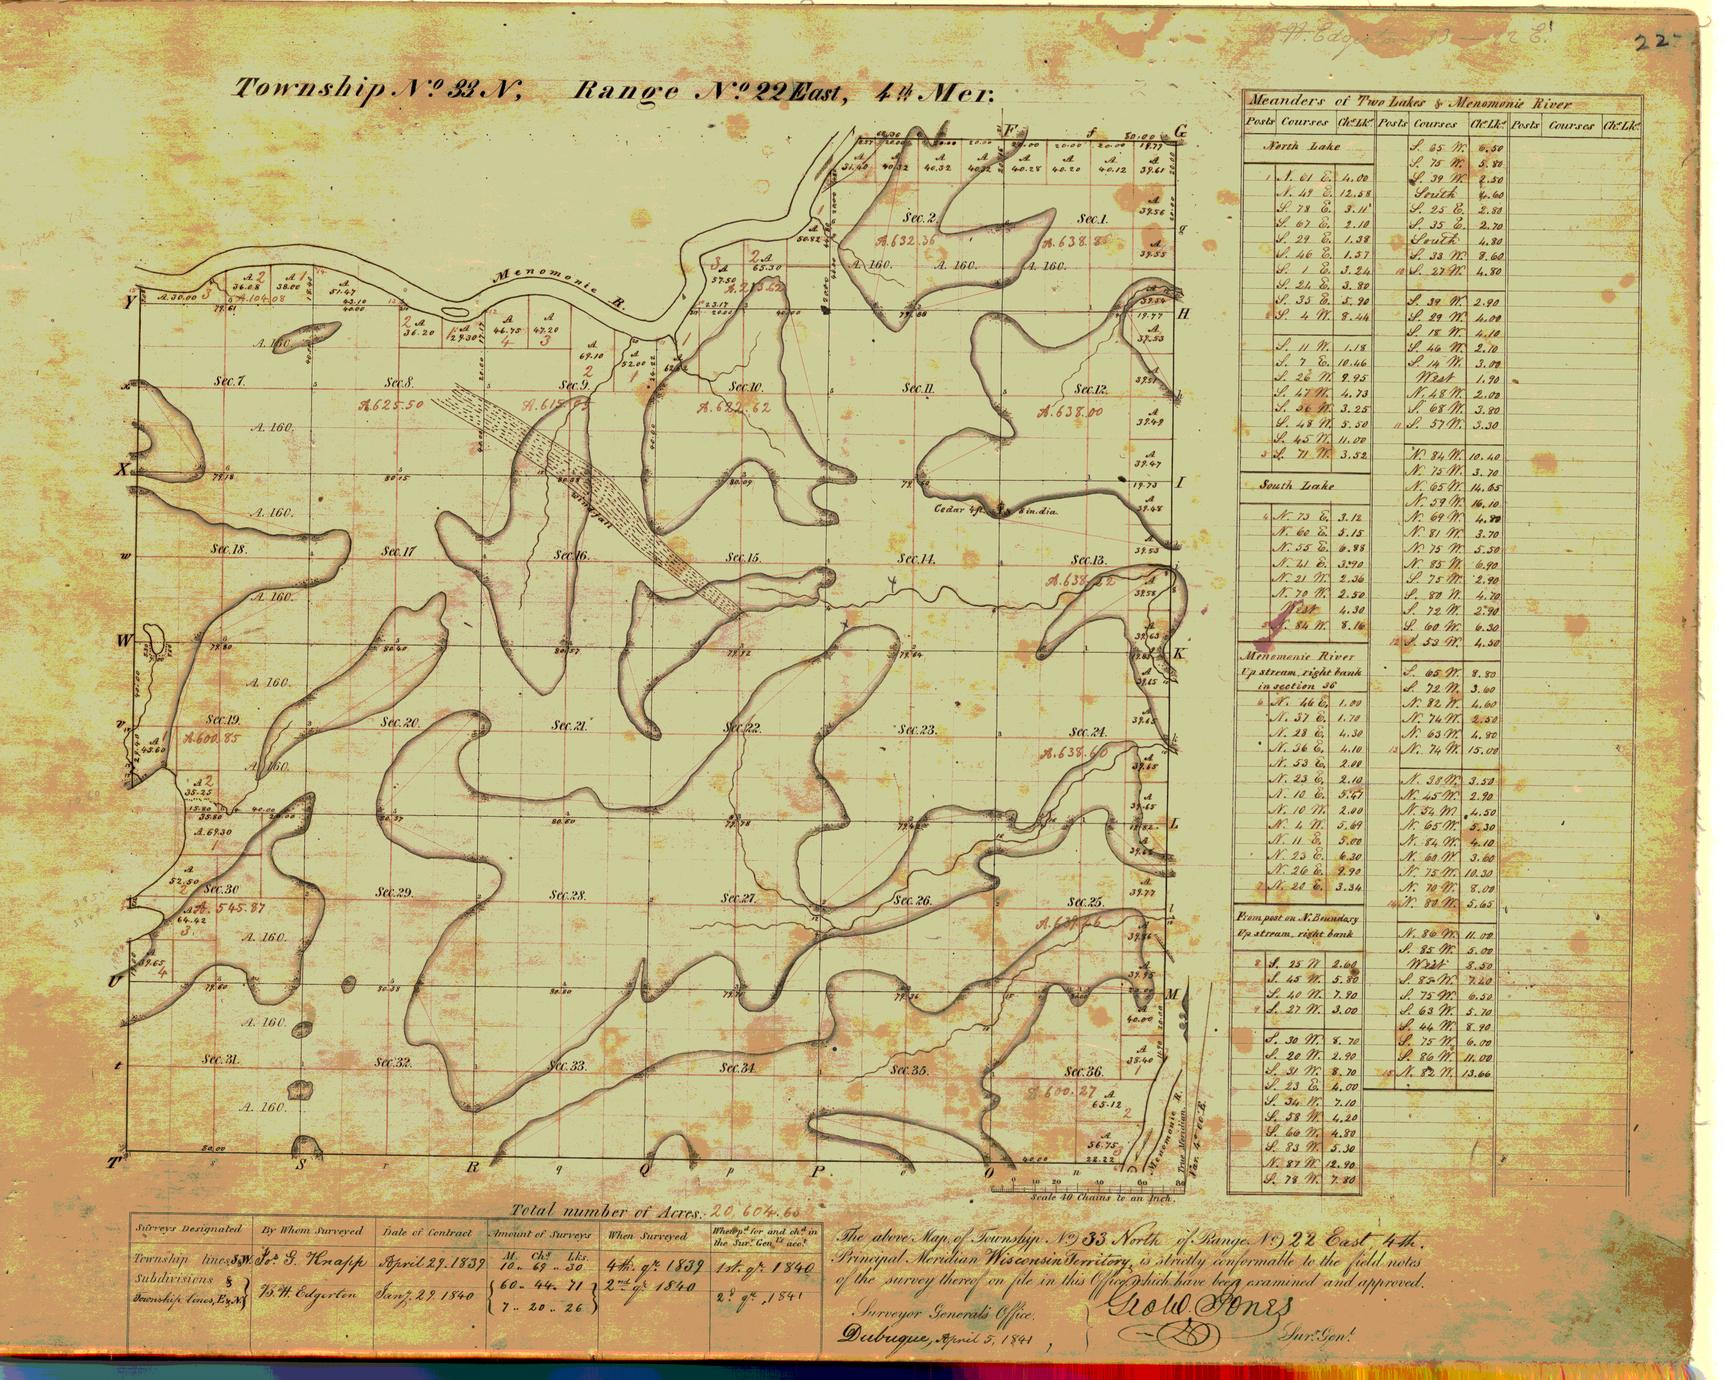 [Public Land Survey System map: Wisconsin Township 33 North, Range 22 East]